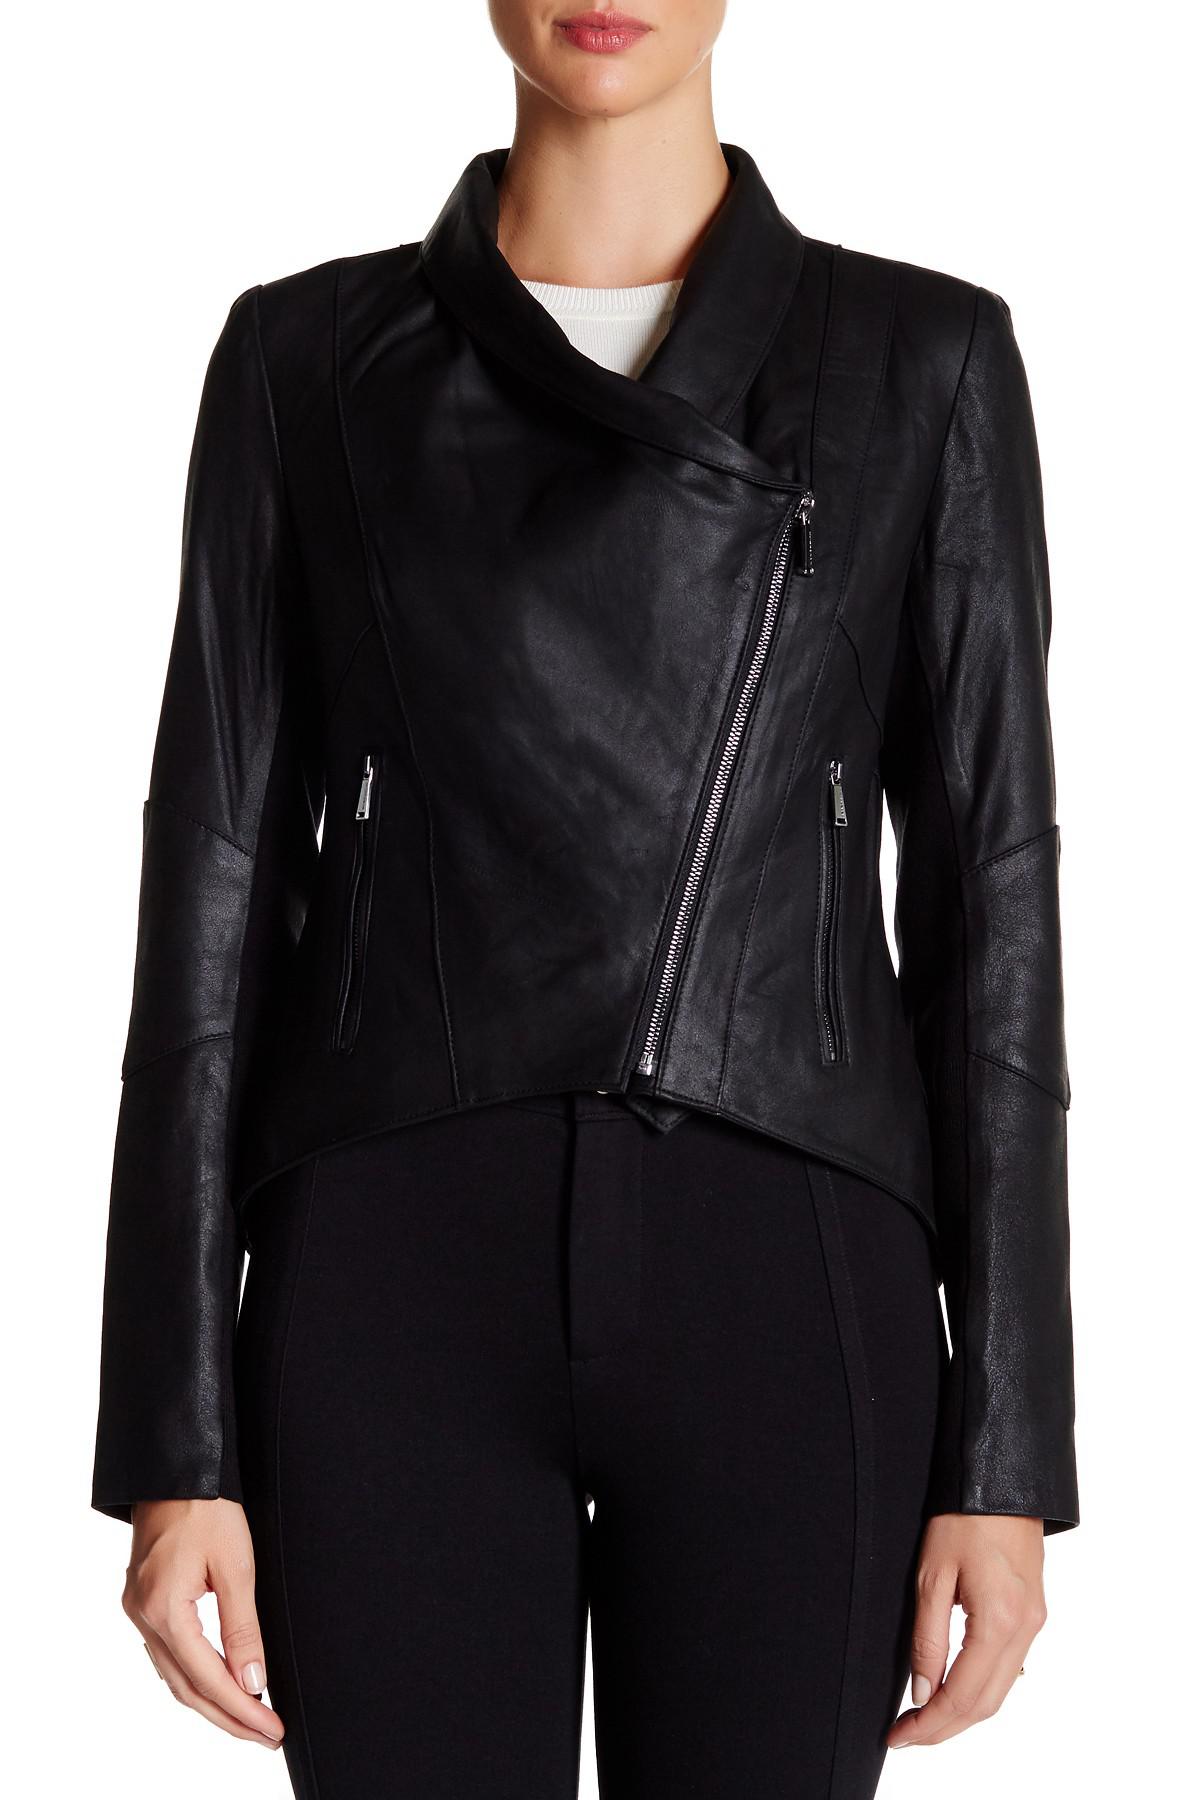 Lyst - Bcbgeneration Genuine Leather Coattail Drape Front Jacket in Black